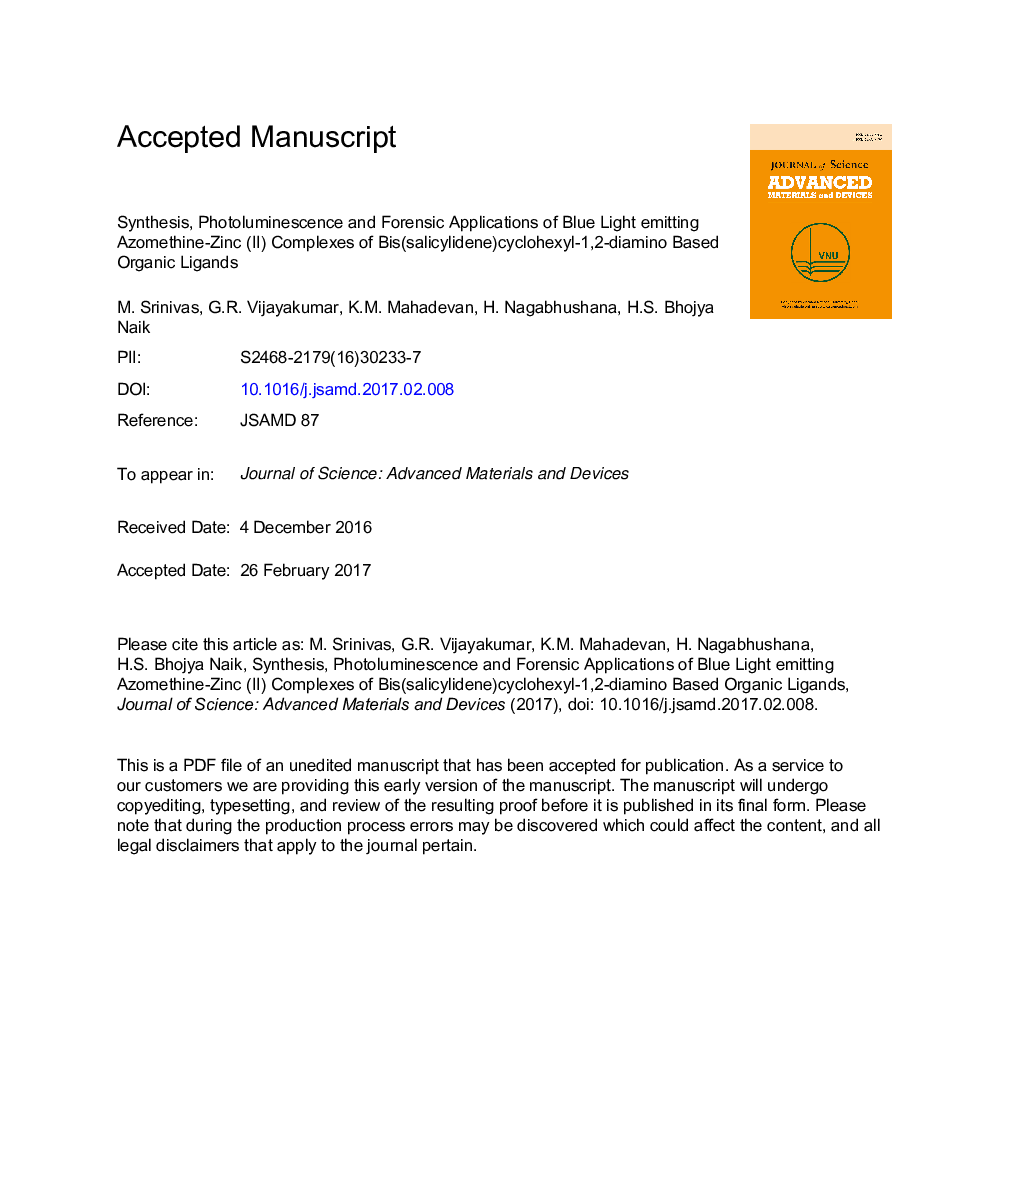 Synthesis, photoluminescence and forensic applications of blue light emitting azomethine-zinc (II) complexes of bis(salicylidene)cyclohexyl-1,2-diamino based organic ligands